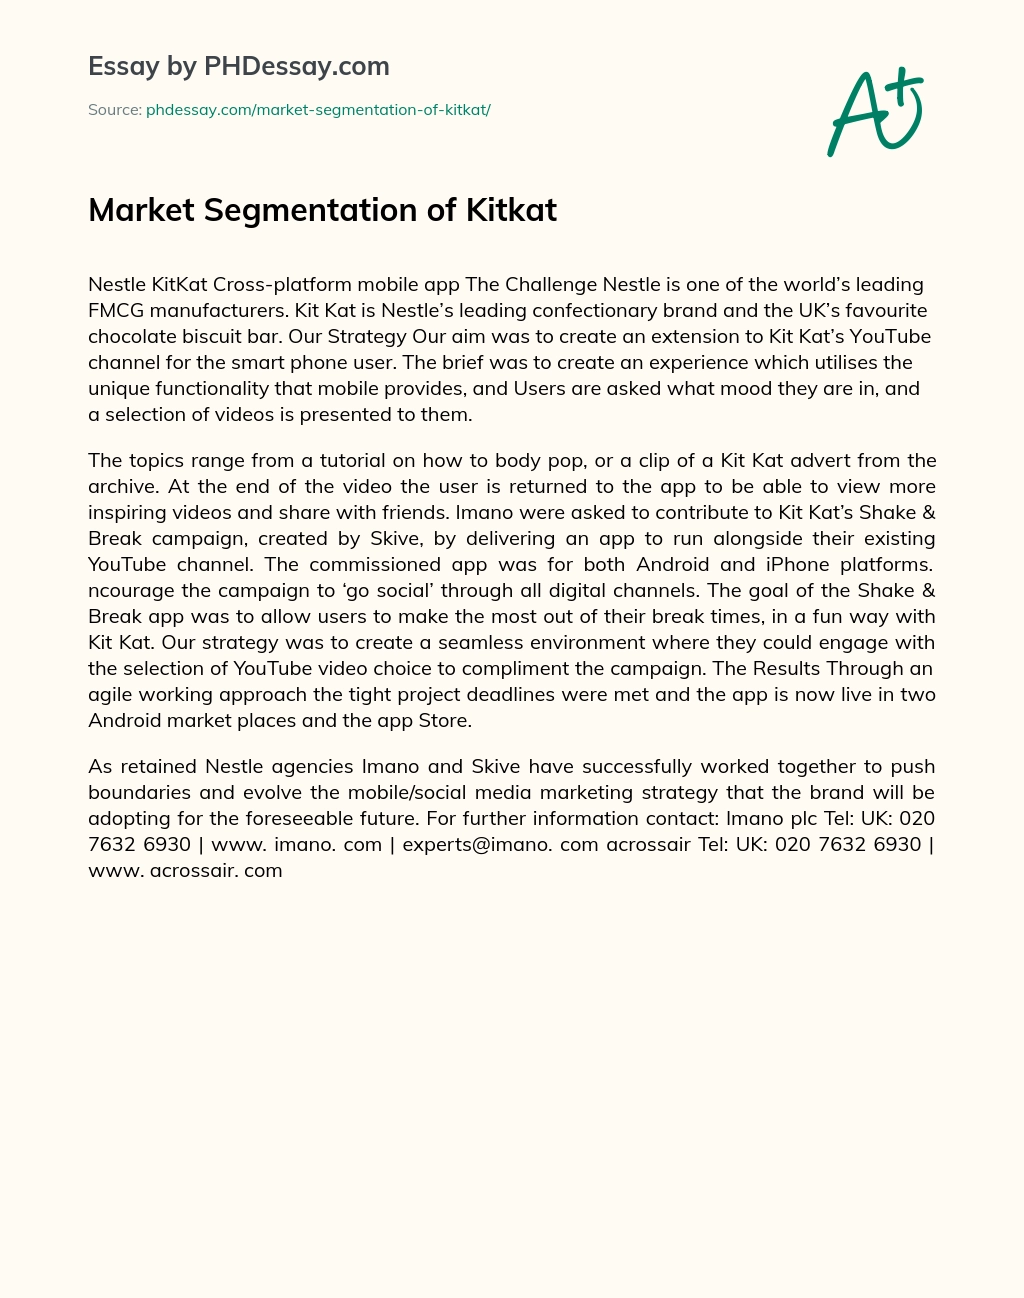 Market Segmentation of Kitkat essay